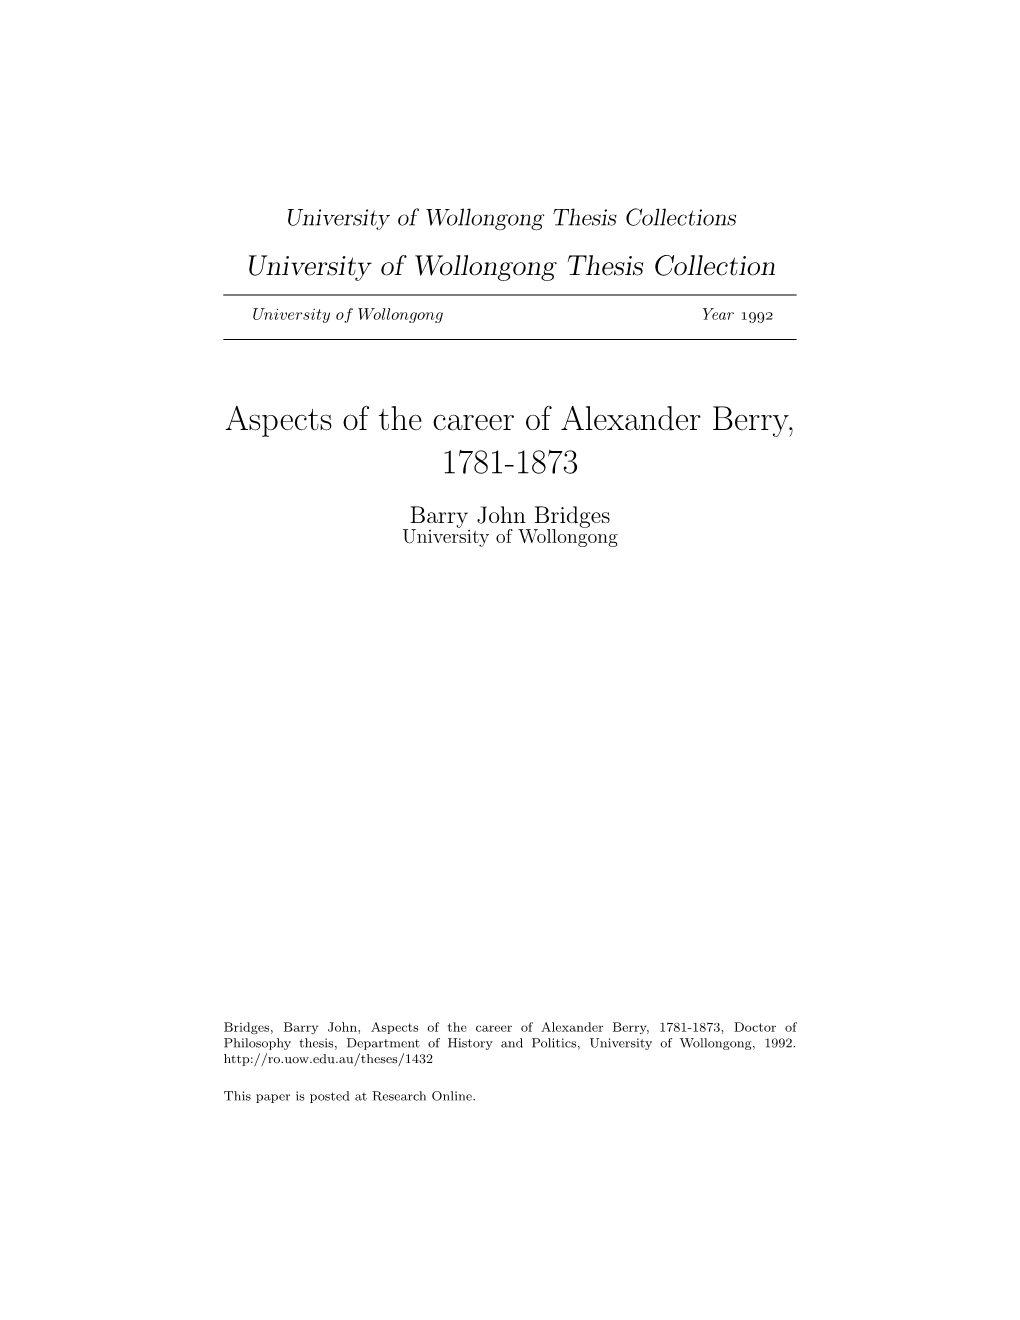 Aspects of the Career of Alexander Berry, 1781-1873 Barry John Bridges University of Wollongong